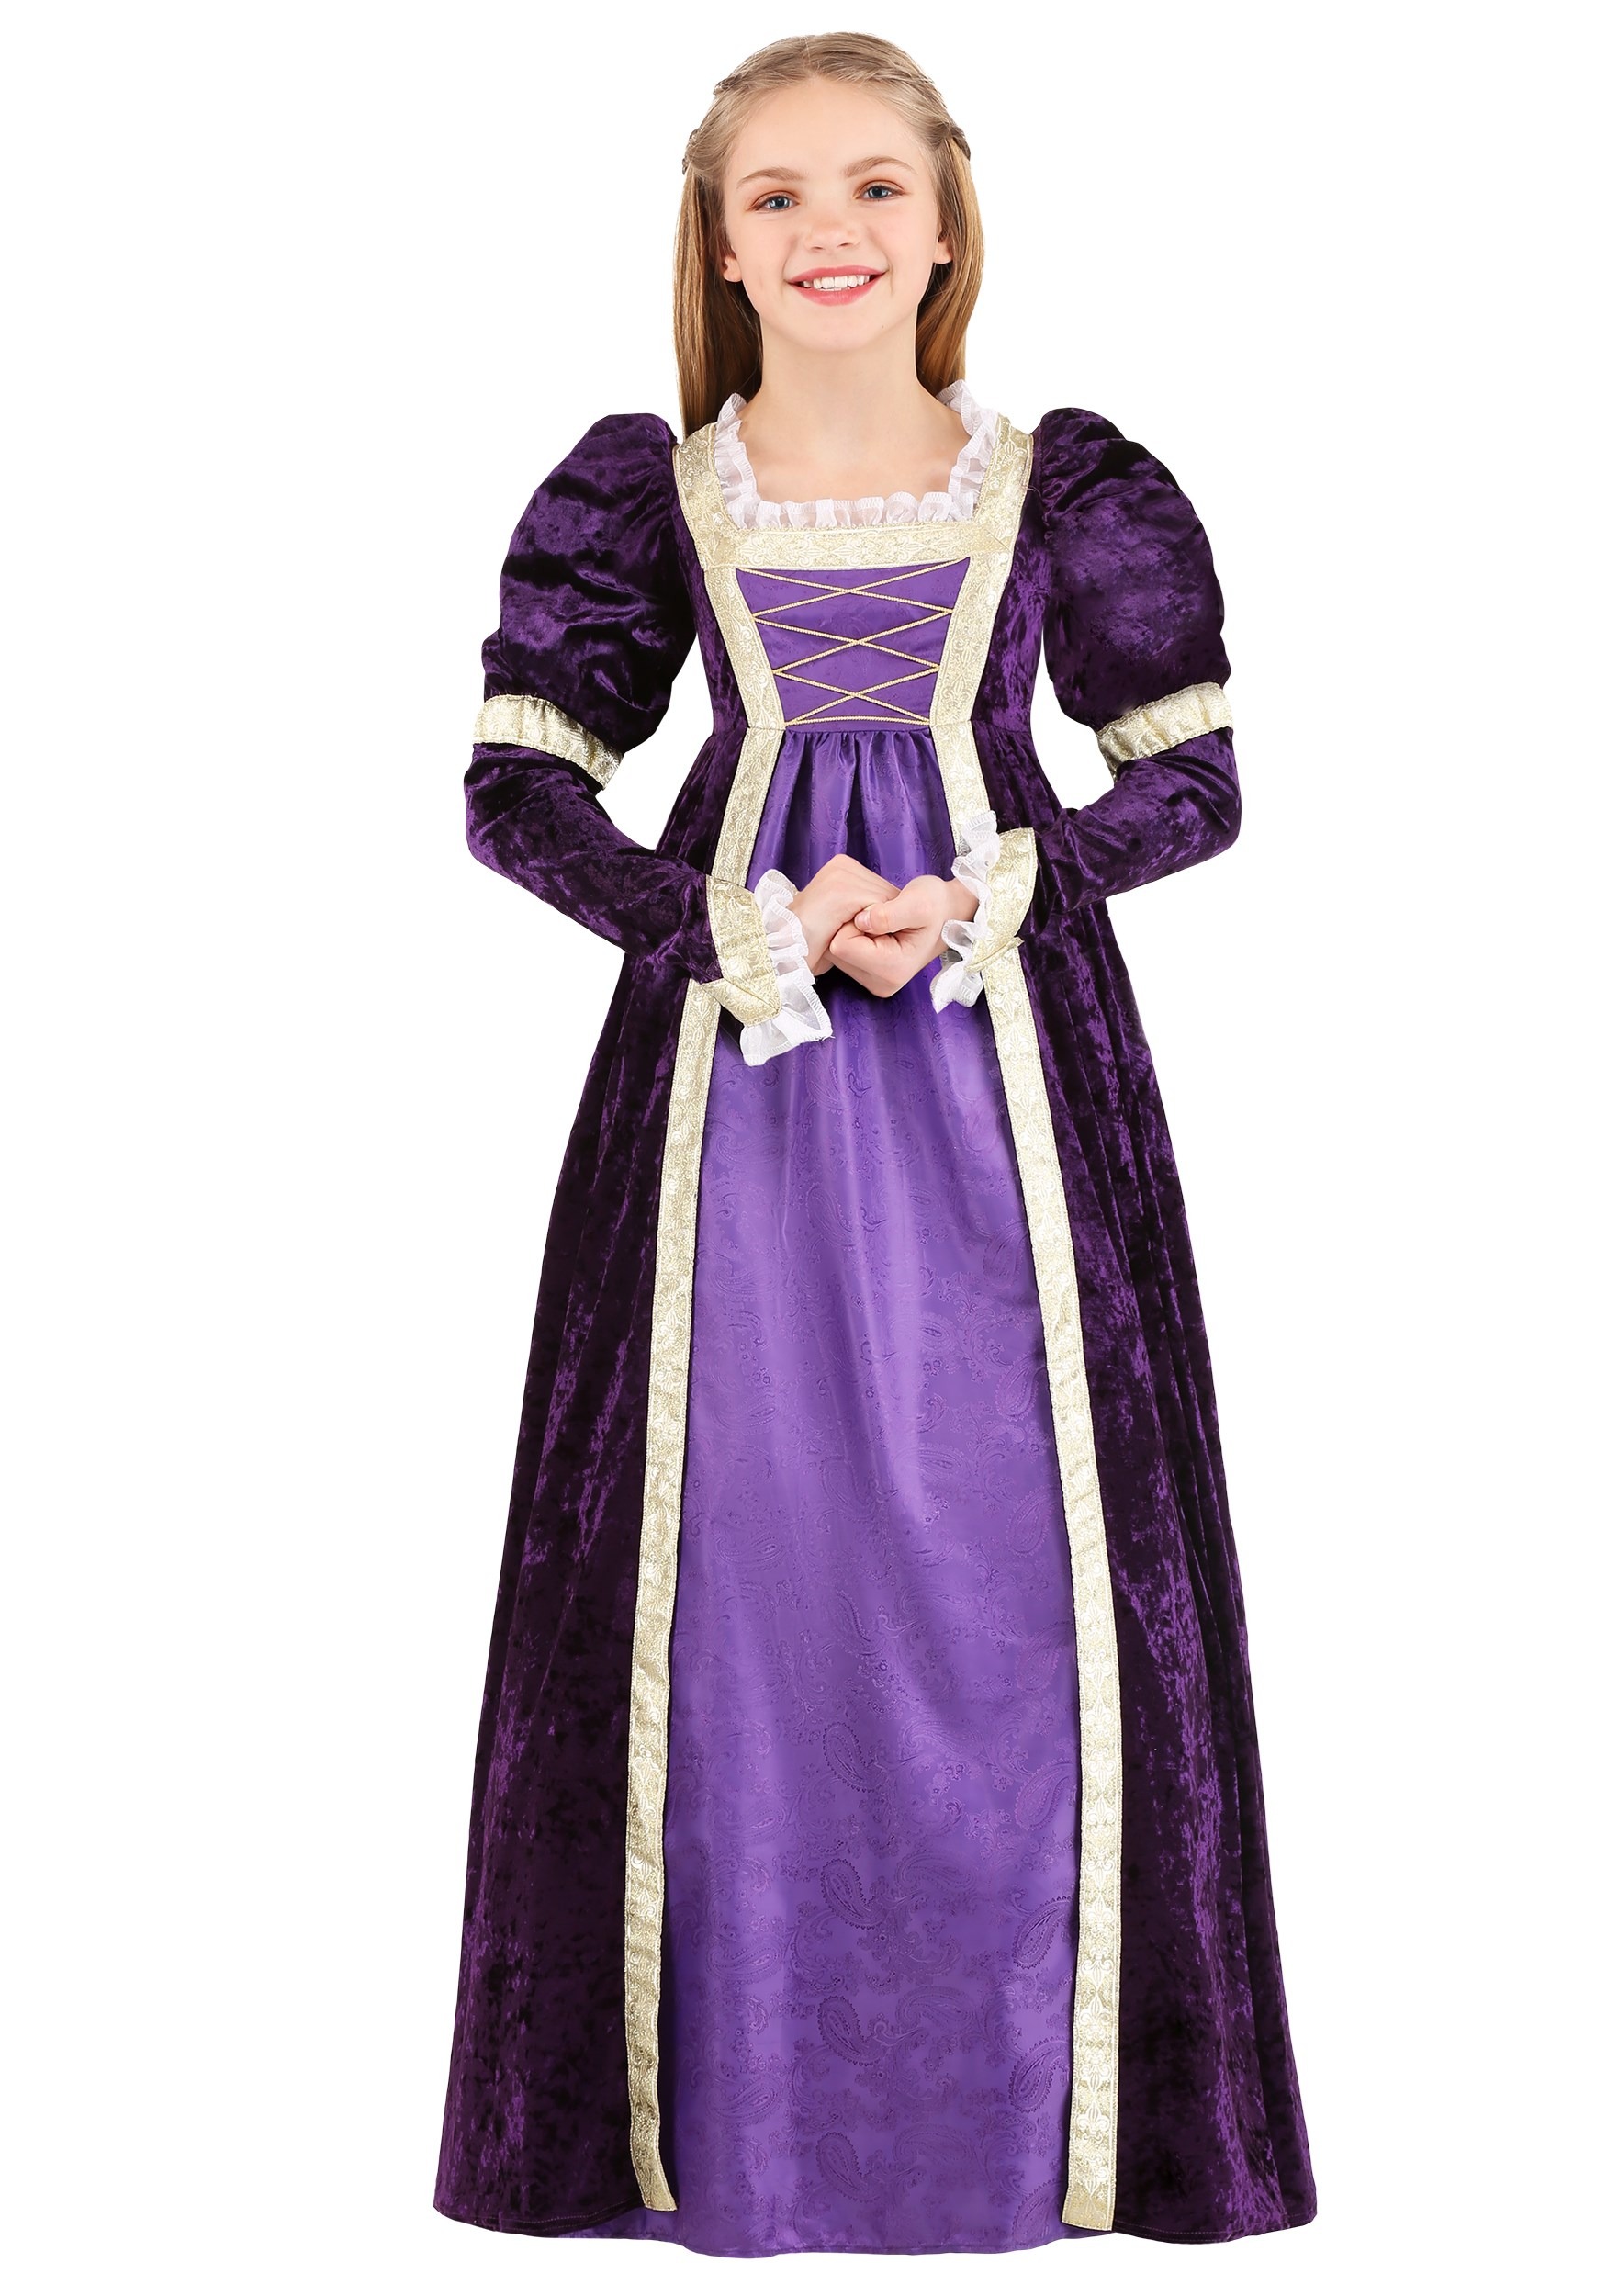 Kid's Amethyst Princess Costume , Historical Costumes